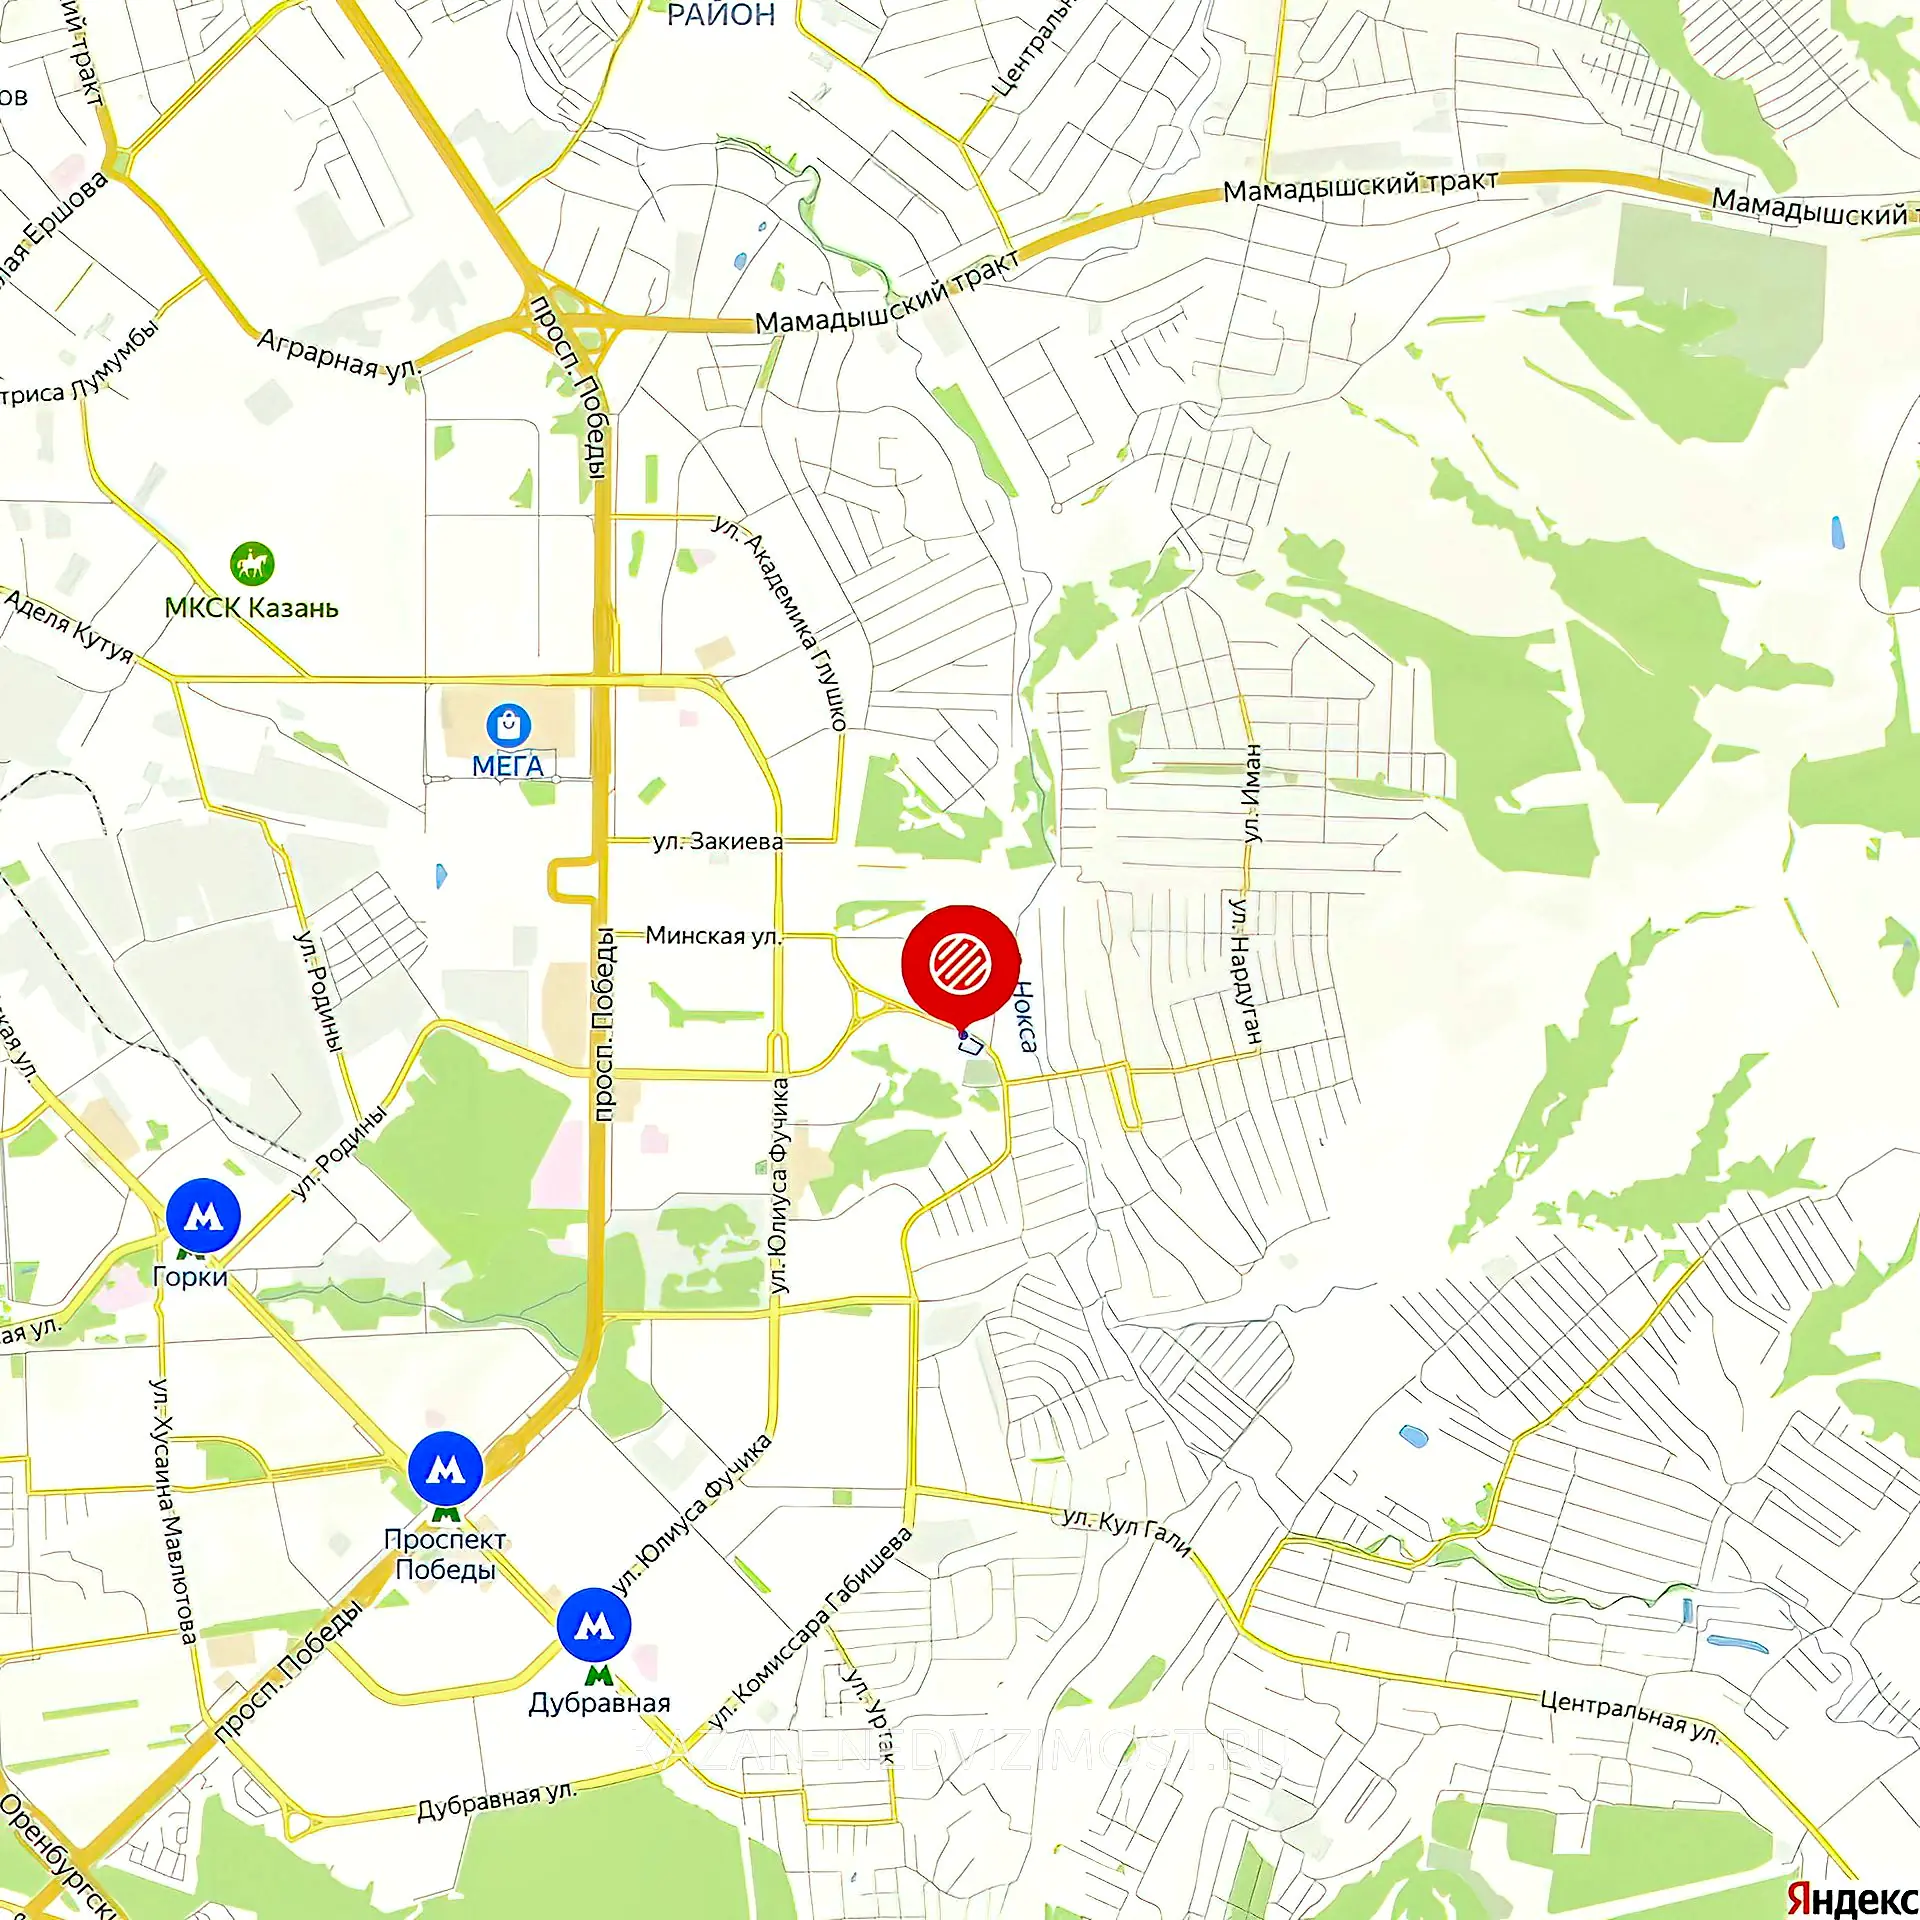 Расположение и маршрут на карте от ЖК Вознесение до центра города